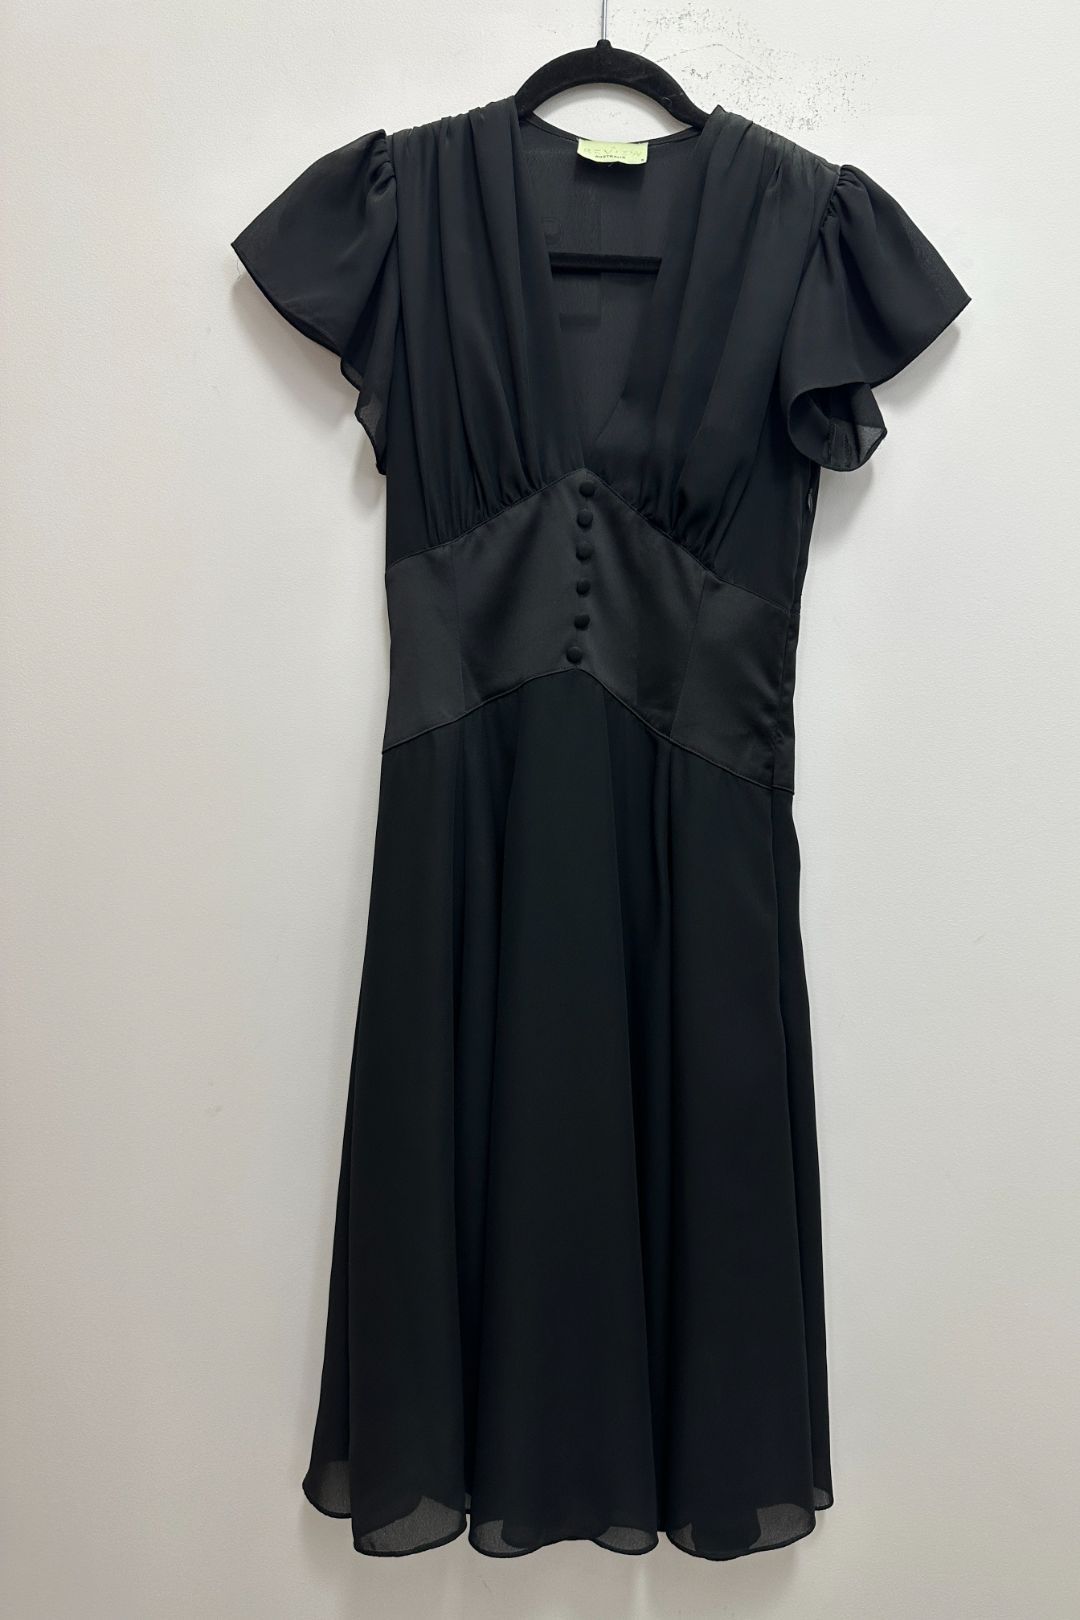 Classic Empire Waist Black Dress